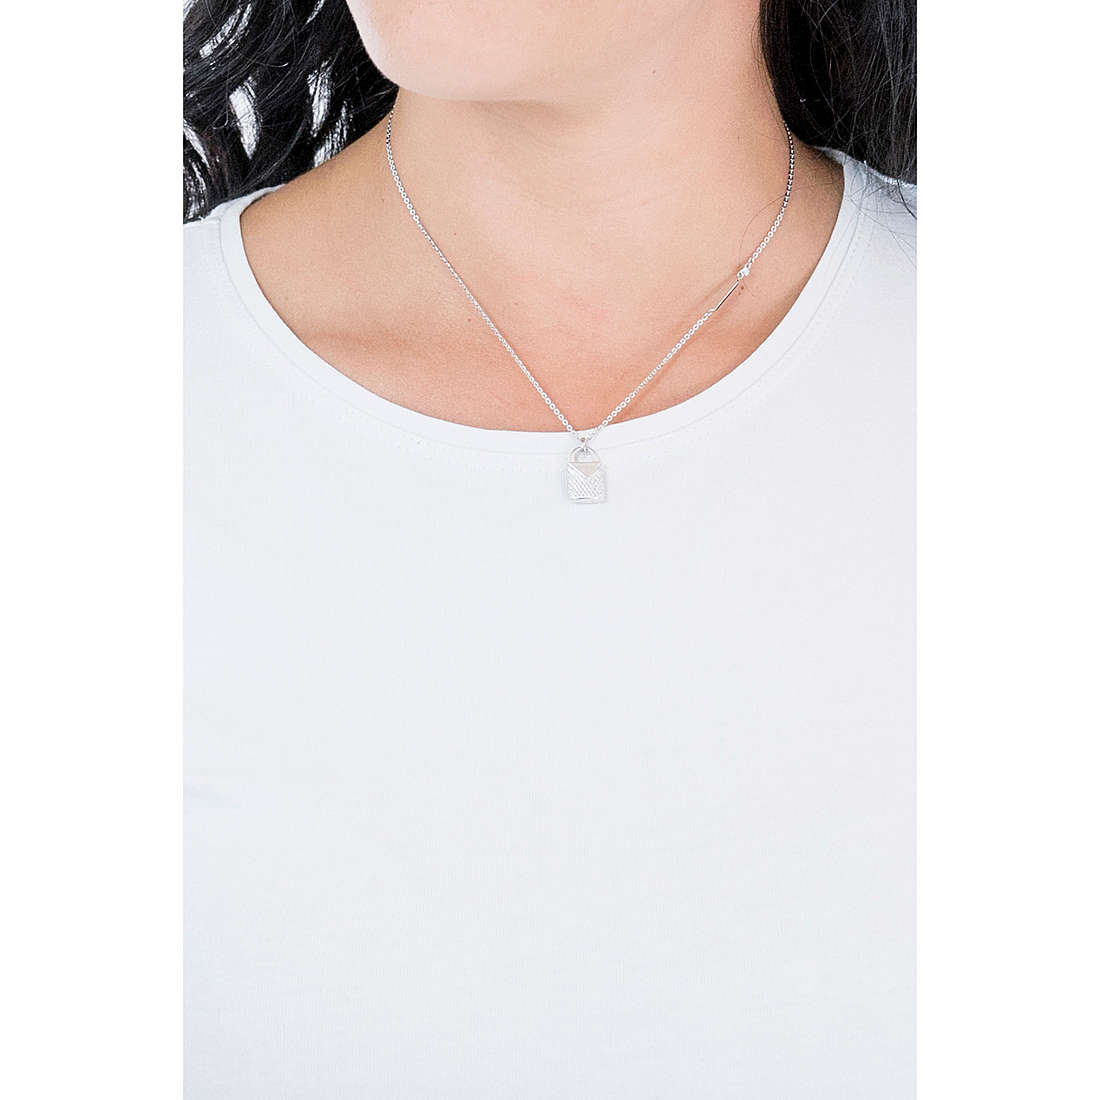 Michael Kors necklaces Kors Color woman MKC1040AN040 wearing